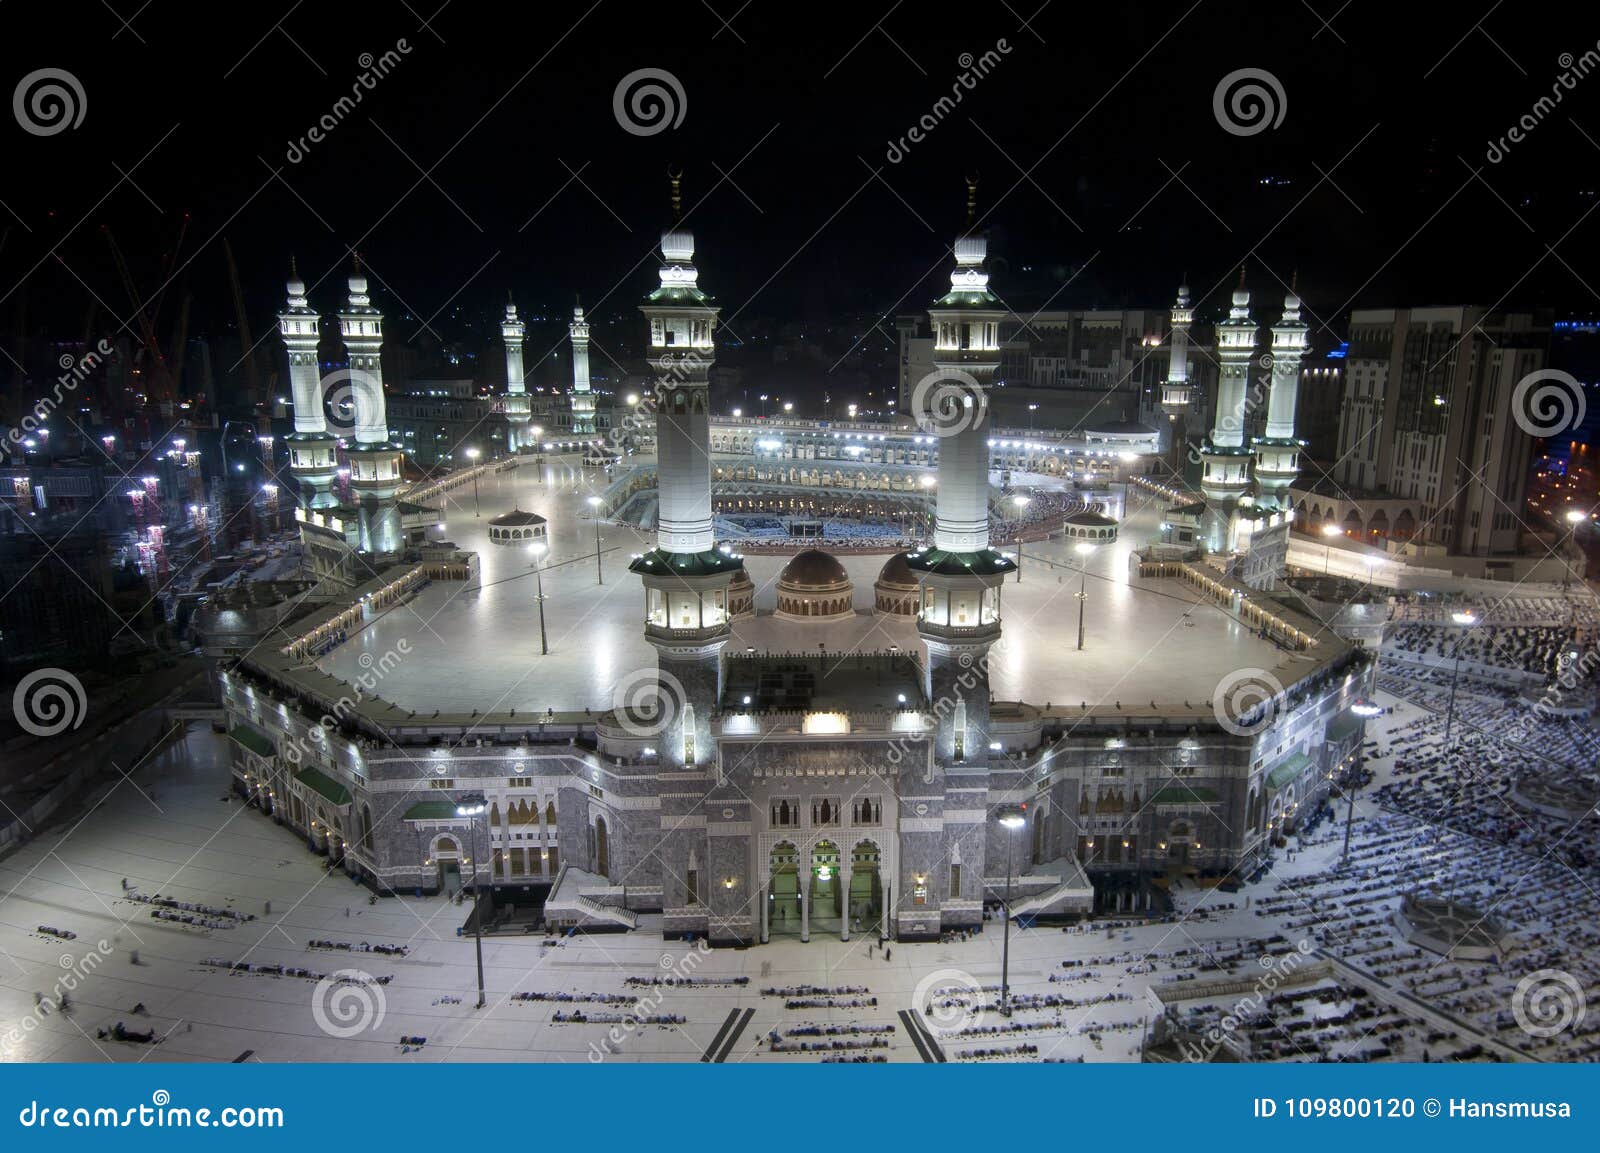 prayer and tawaf of muslims around alkaaba in mecca, saudi arabia